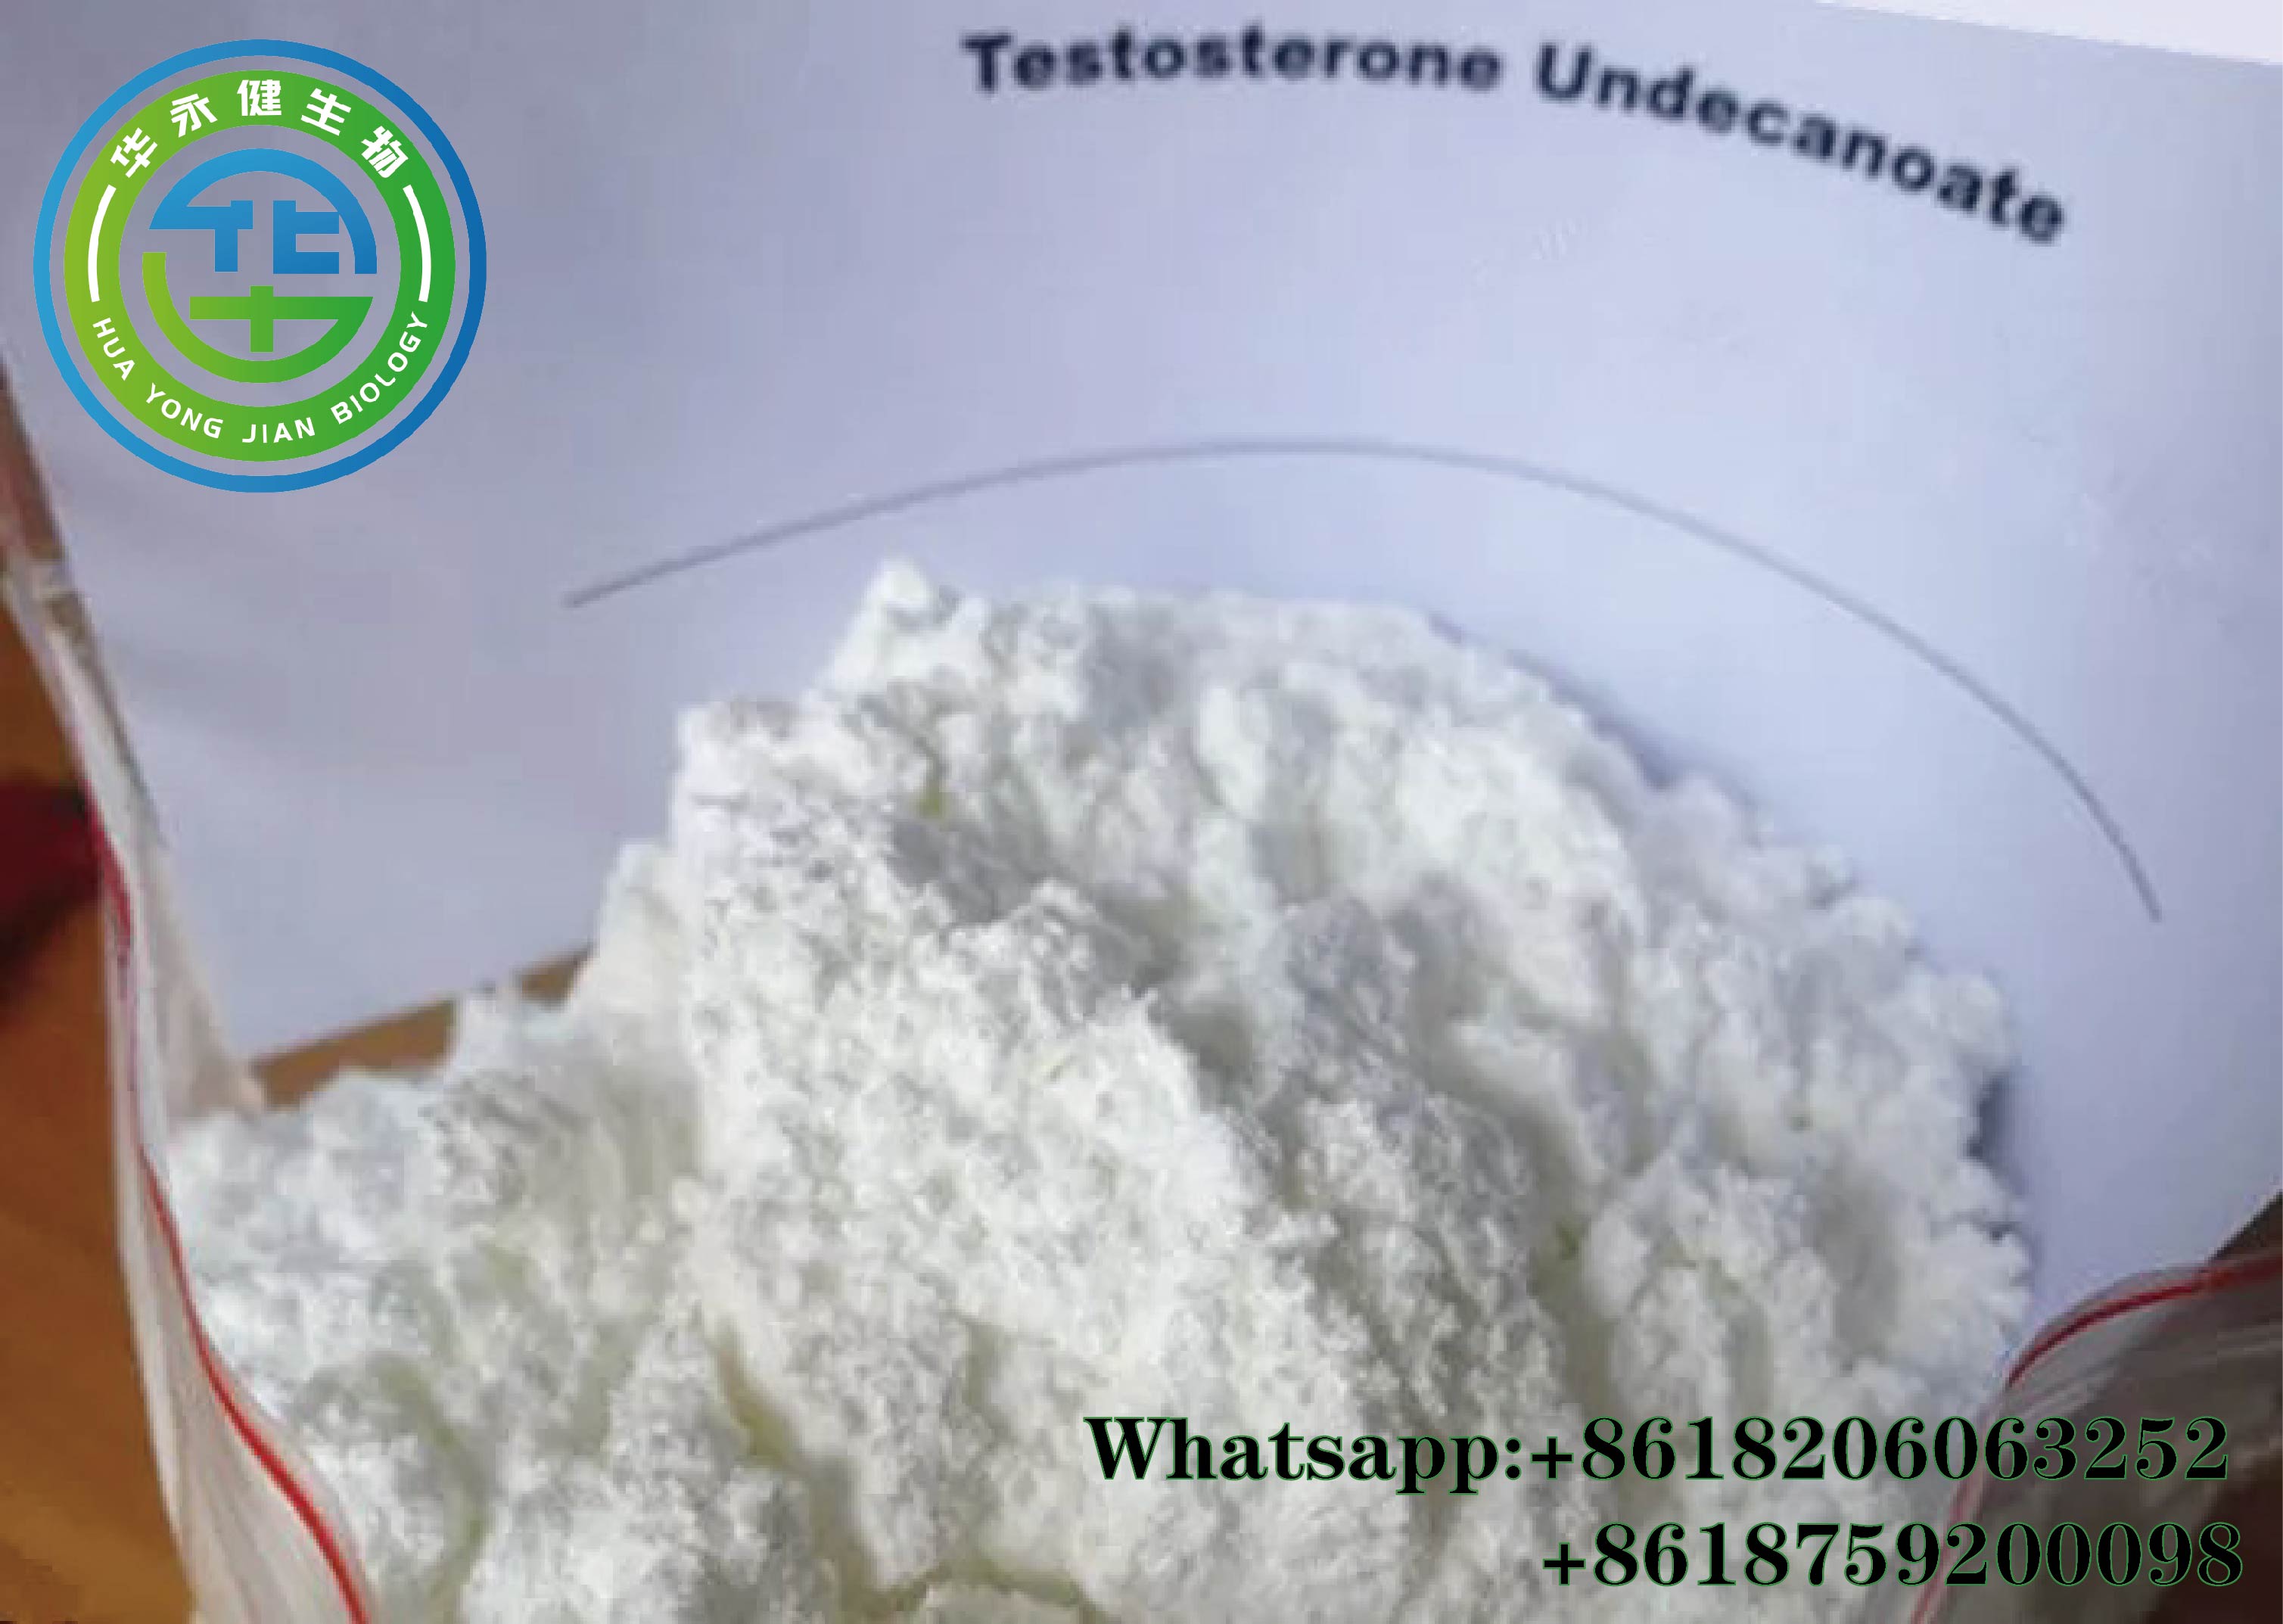 Testosterone Undecanoate11